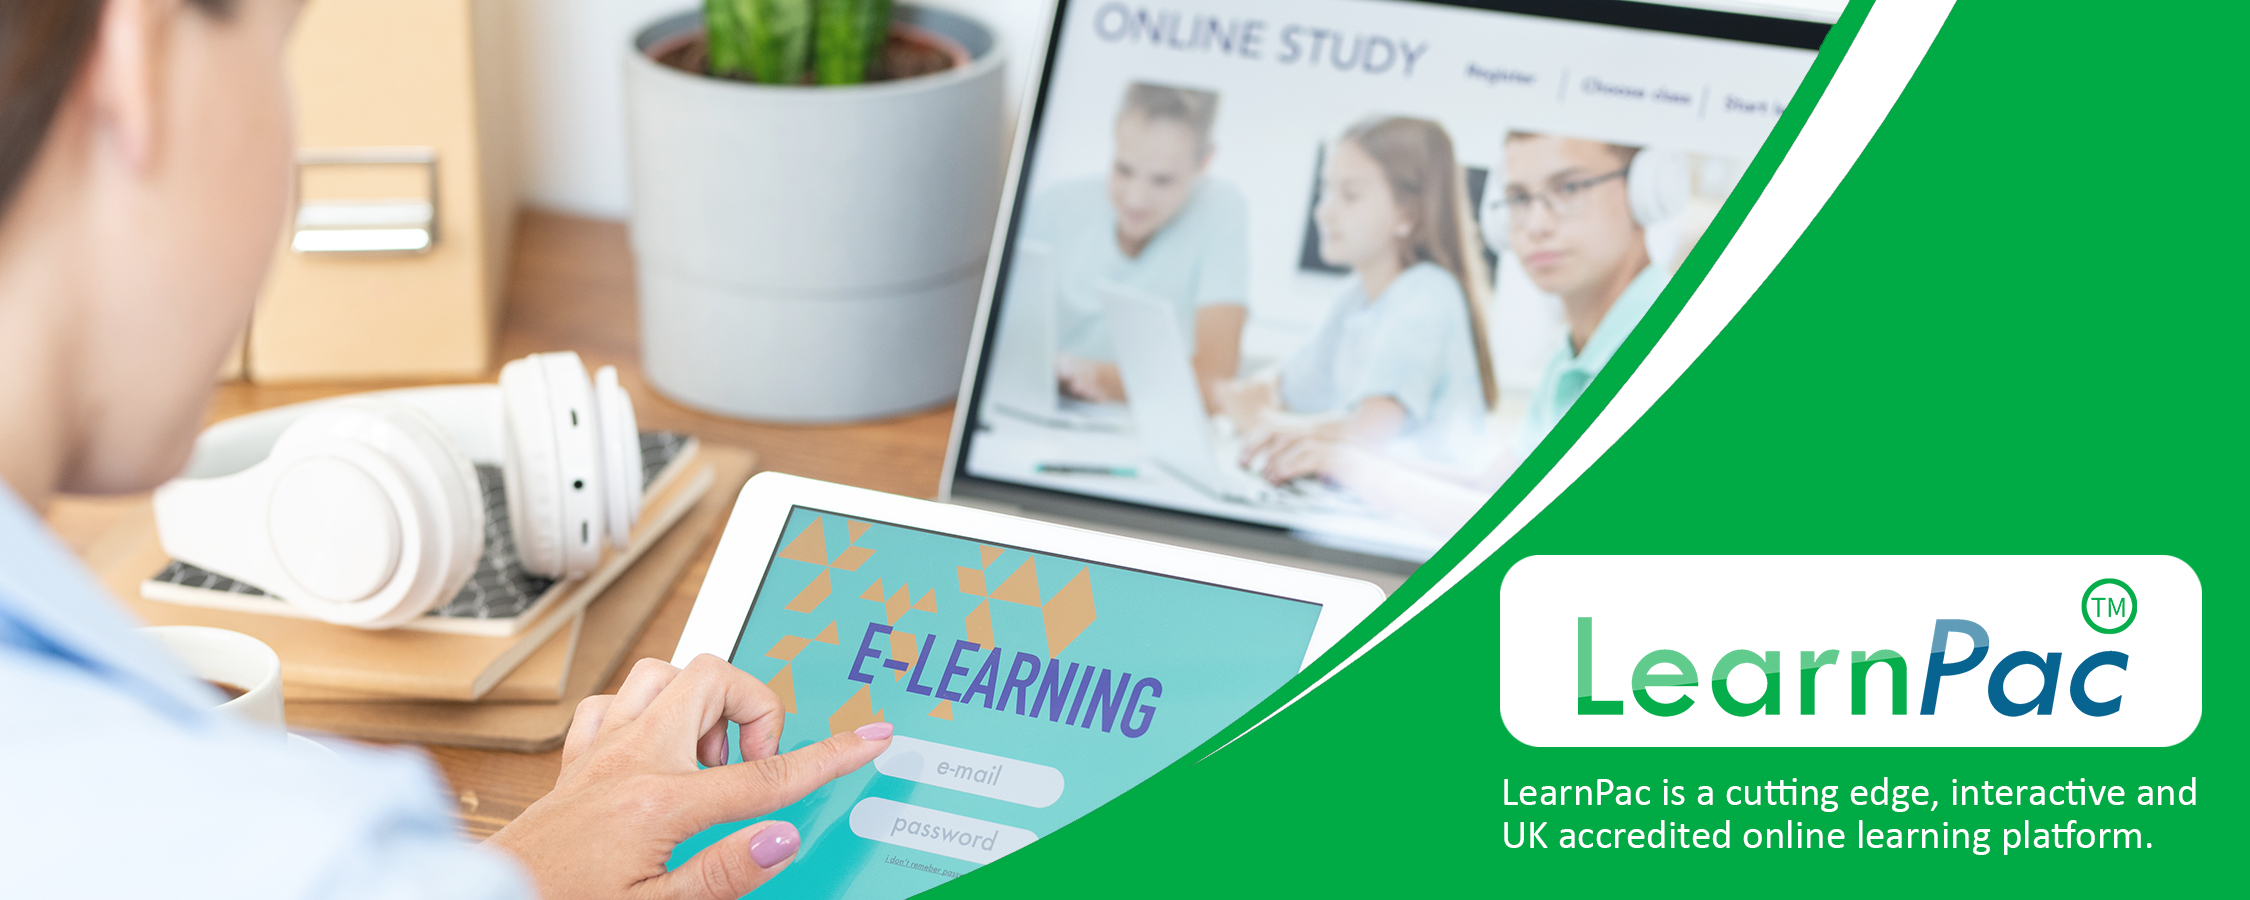 High-Performance Teams Inside the Company - Online Learning Courses - E-Learning Courses - LearnPac Systems UK -